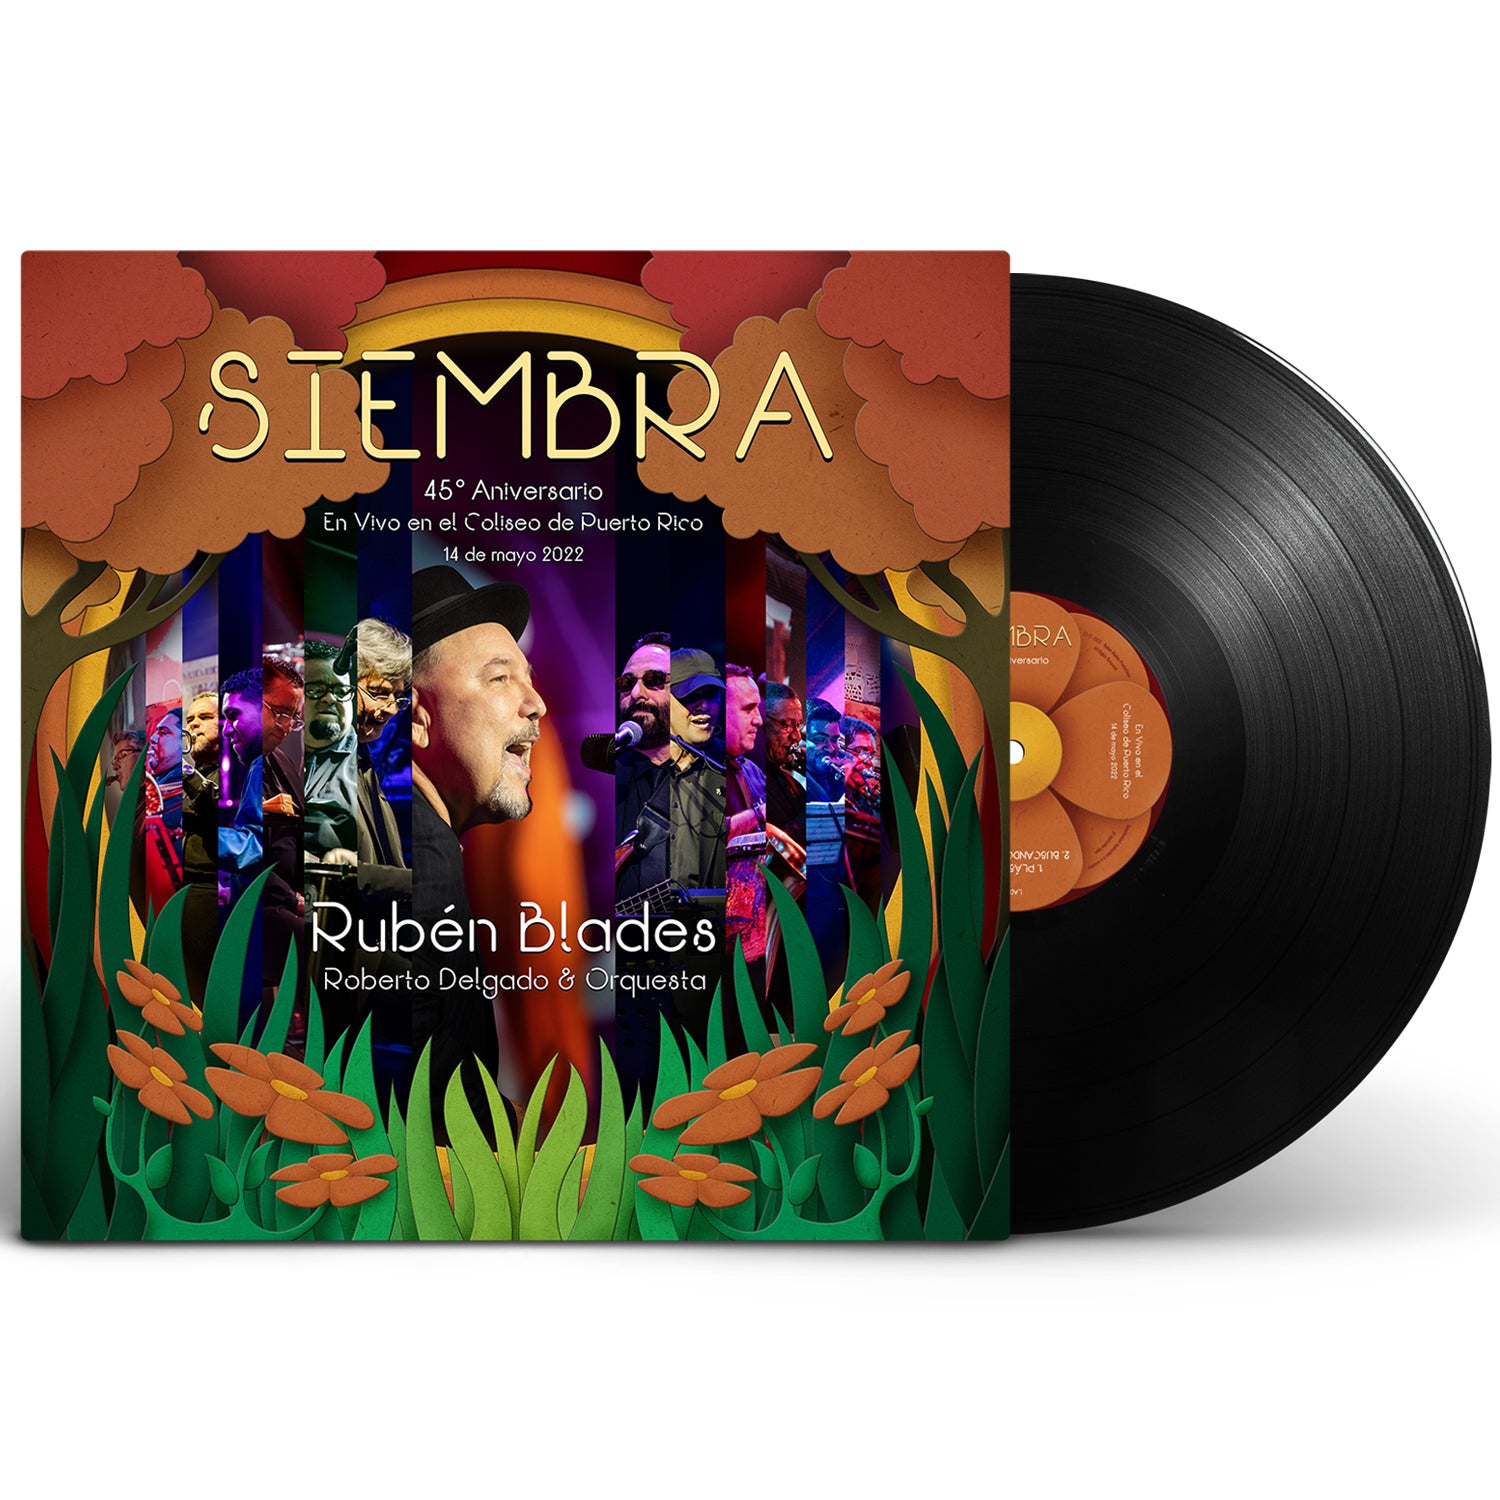 Rubén Blades and Roberto Delgado & Orquesta - Siembra: 45° Aniversario LP